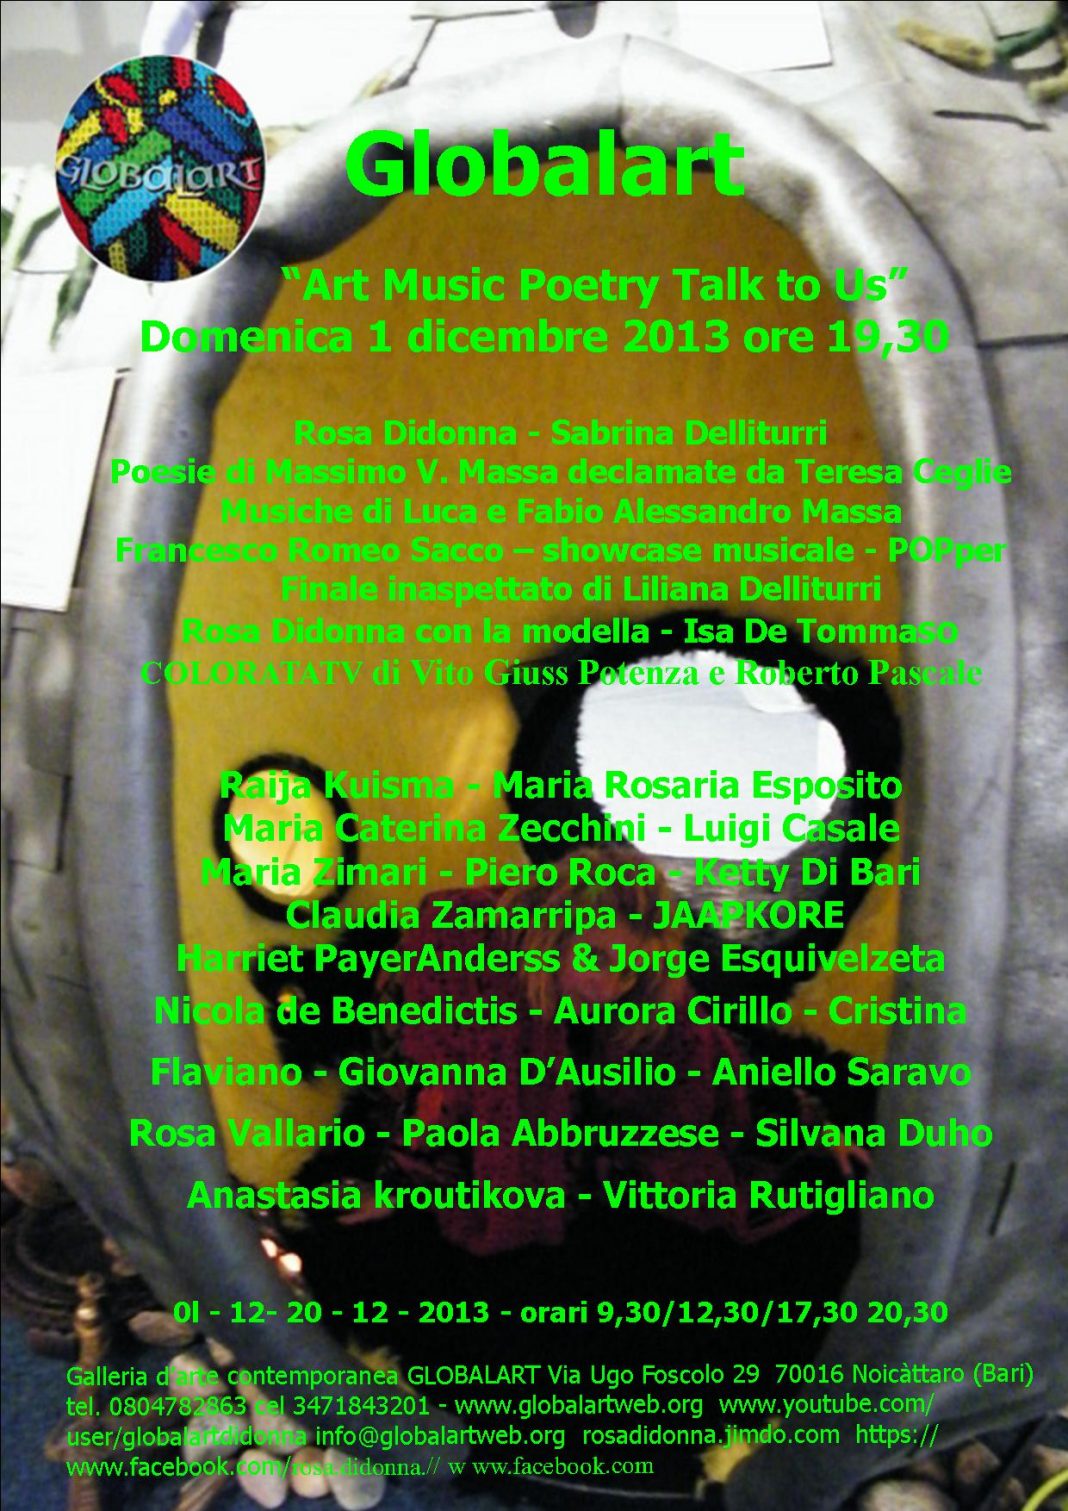 Art Music Poetry Talk to Ushttps://www.exibart.com/repository/media/eventi/2013/11/art-music-poetry-talk-to-us-1068x1511.jpg